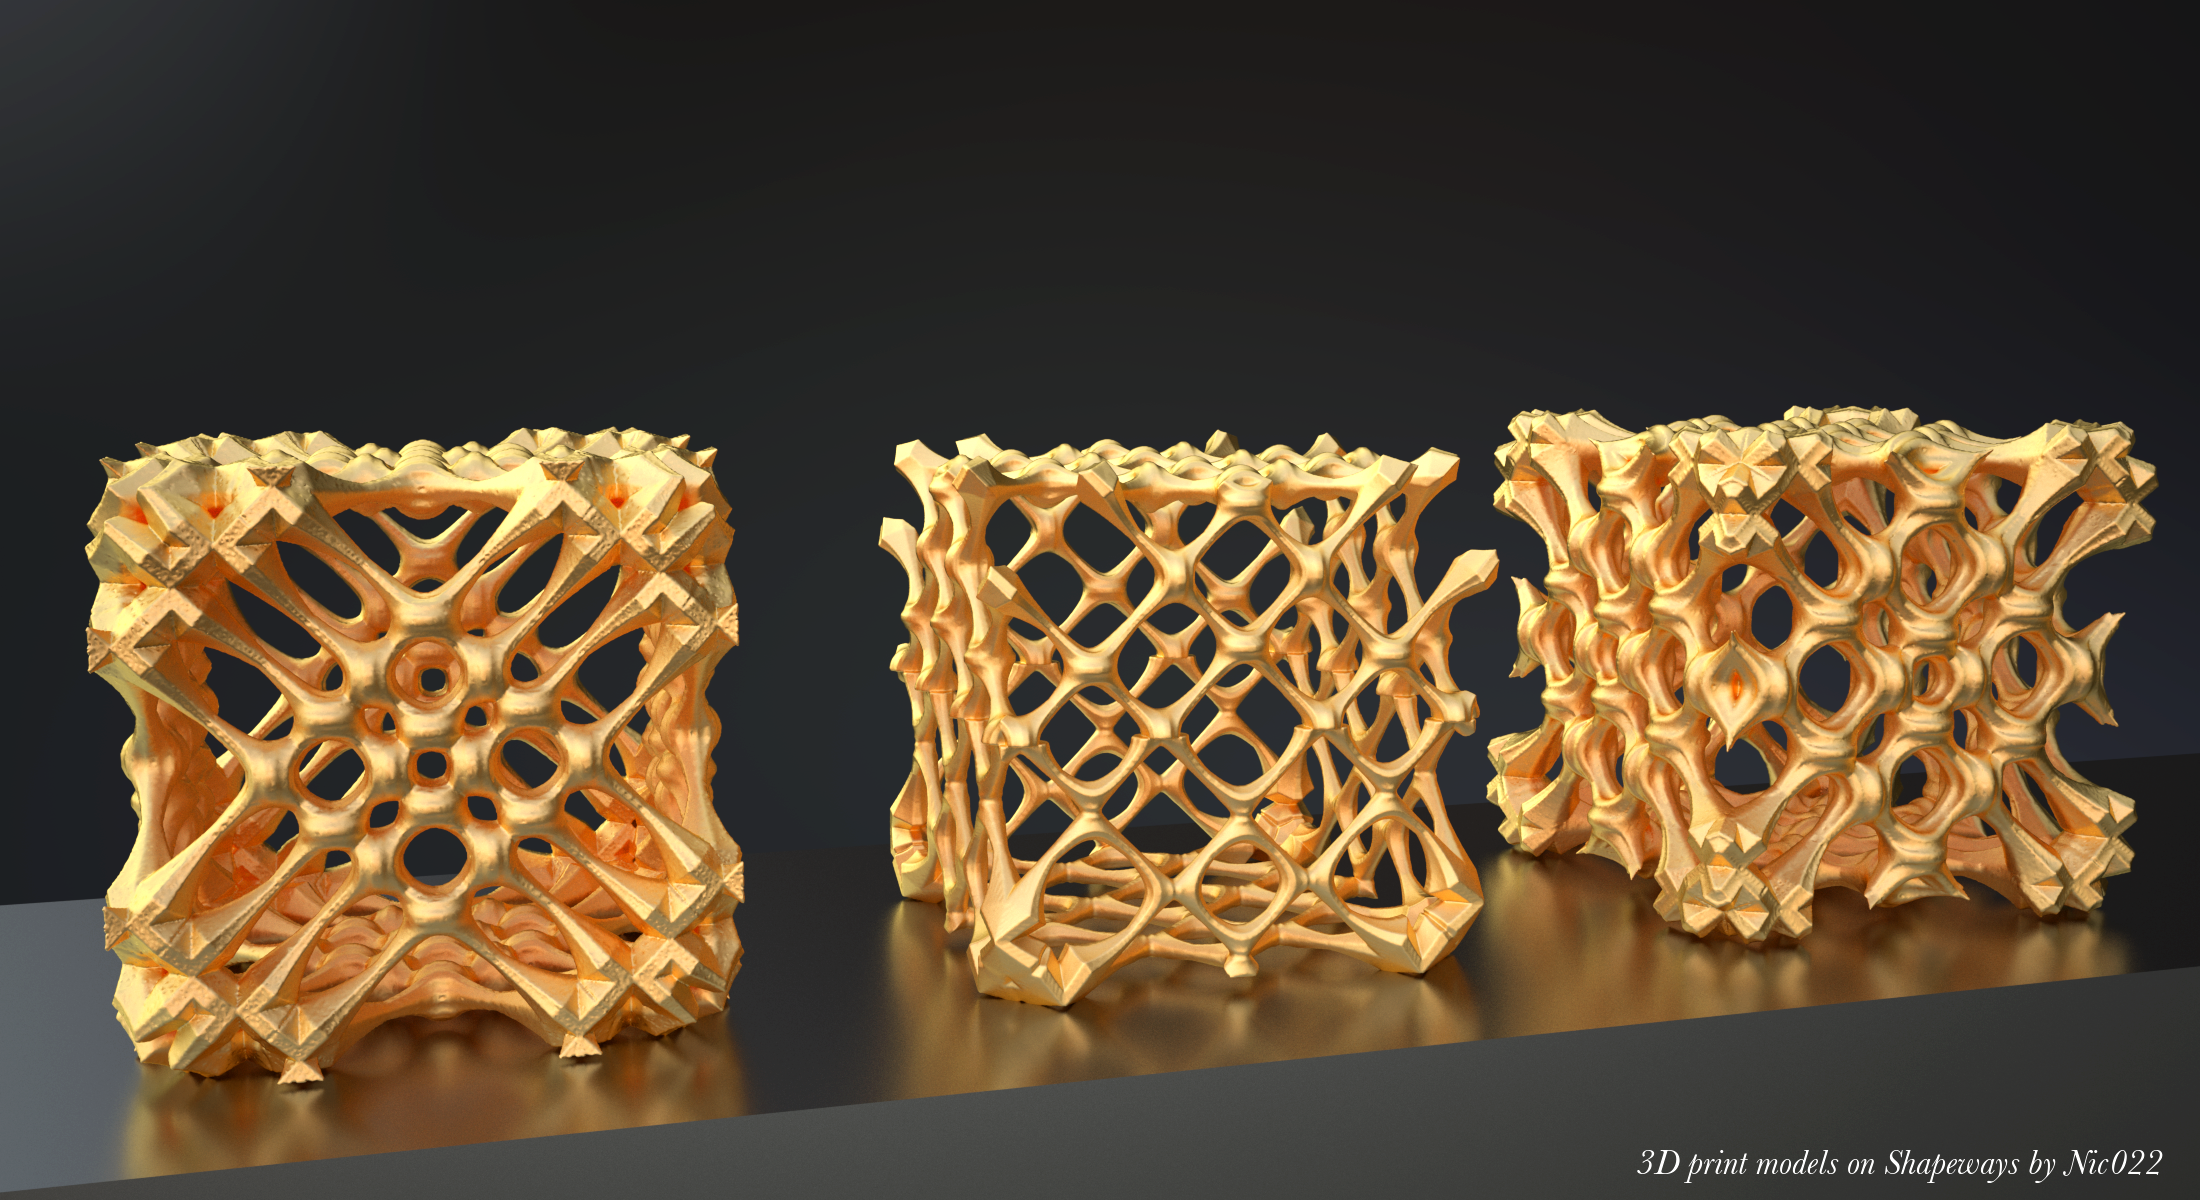 Fractal 3D Printing Shapeways by nic022 DeviantArt